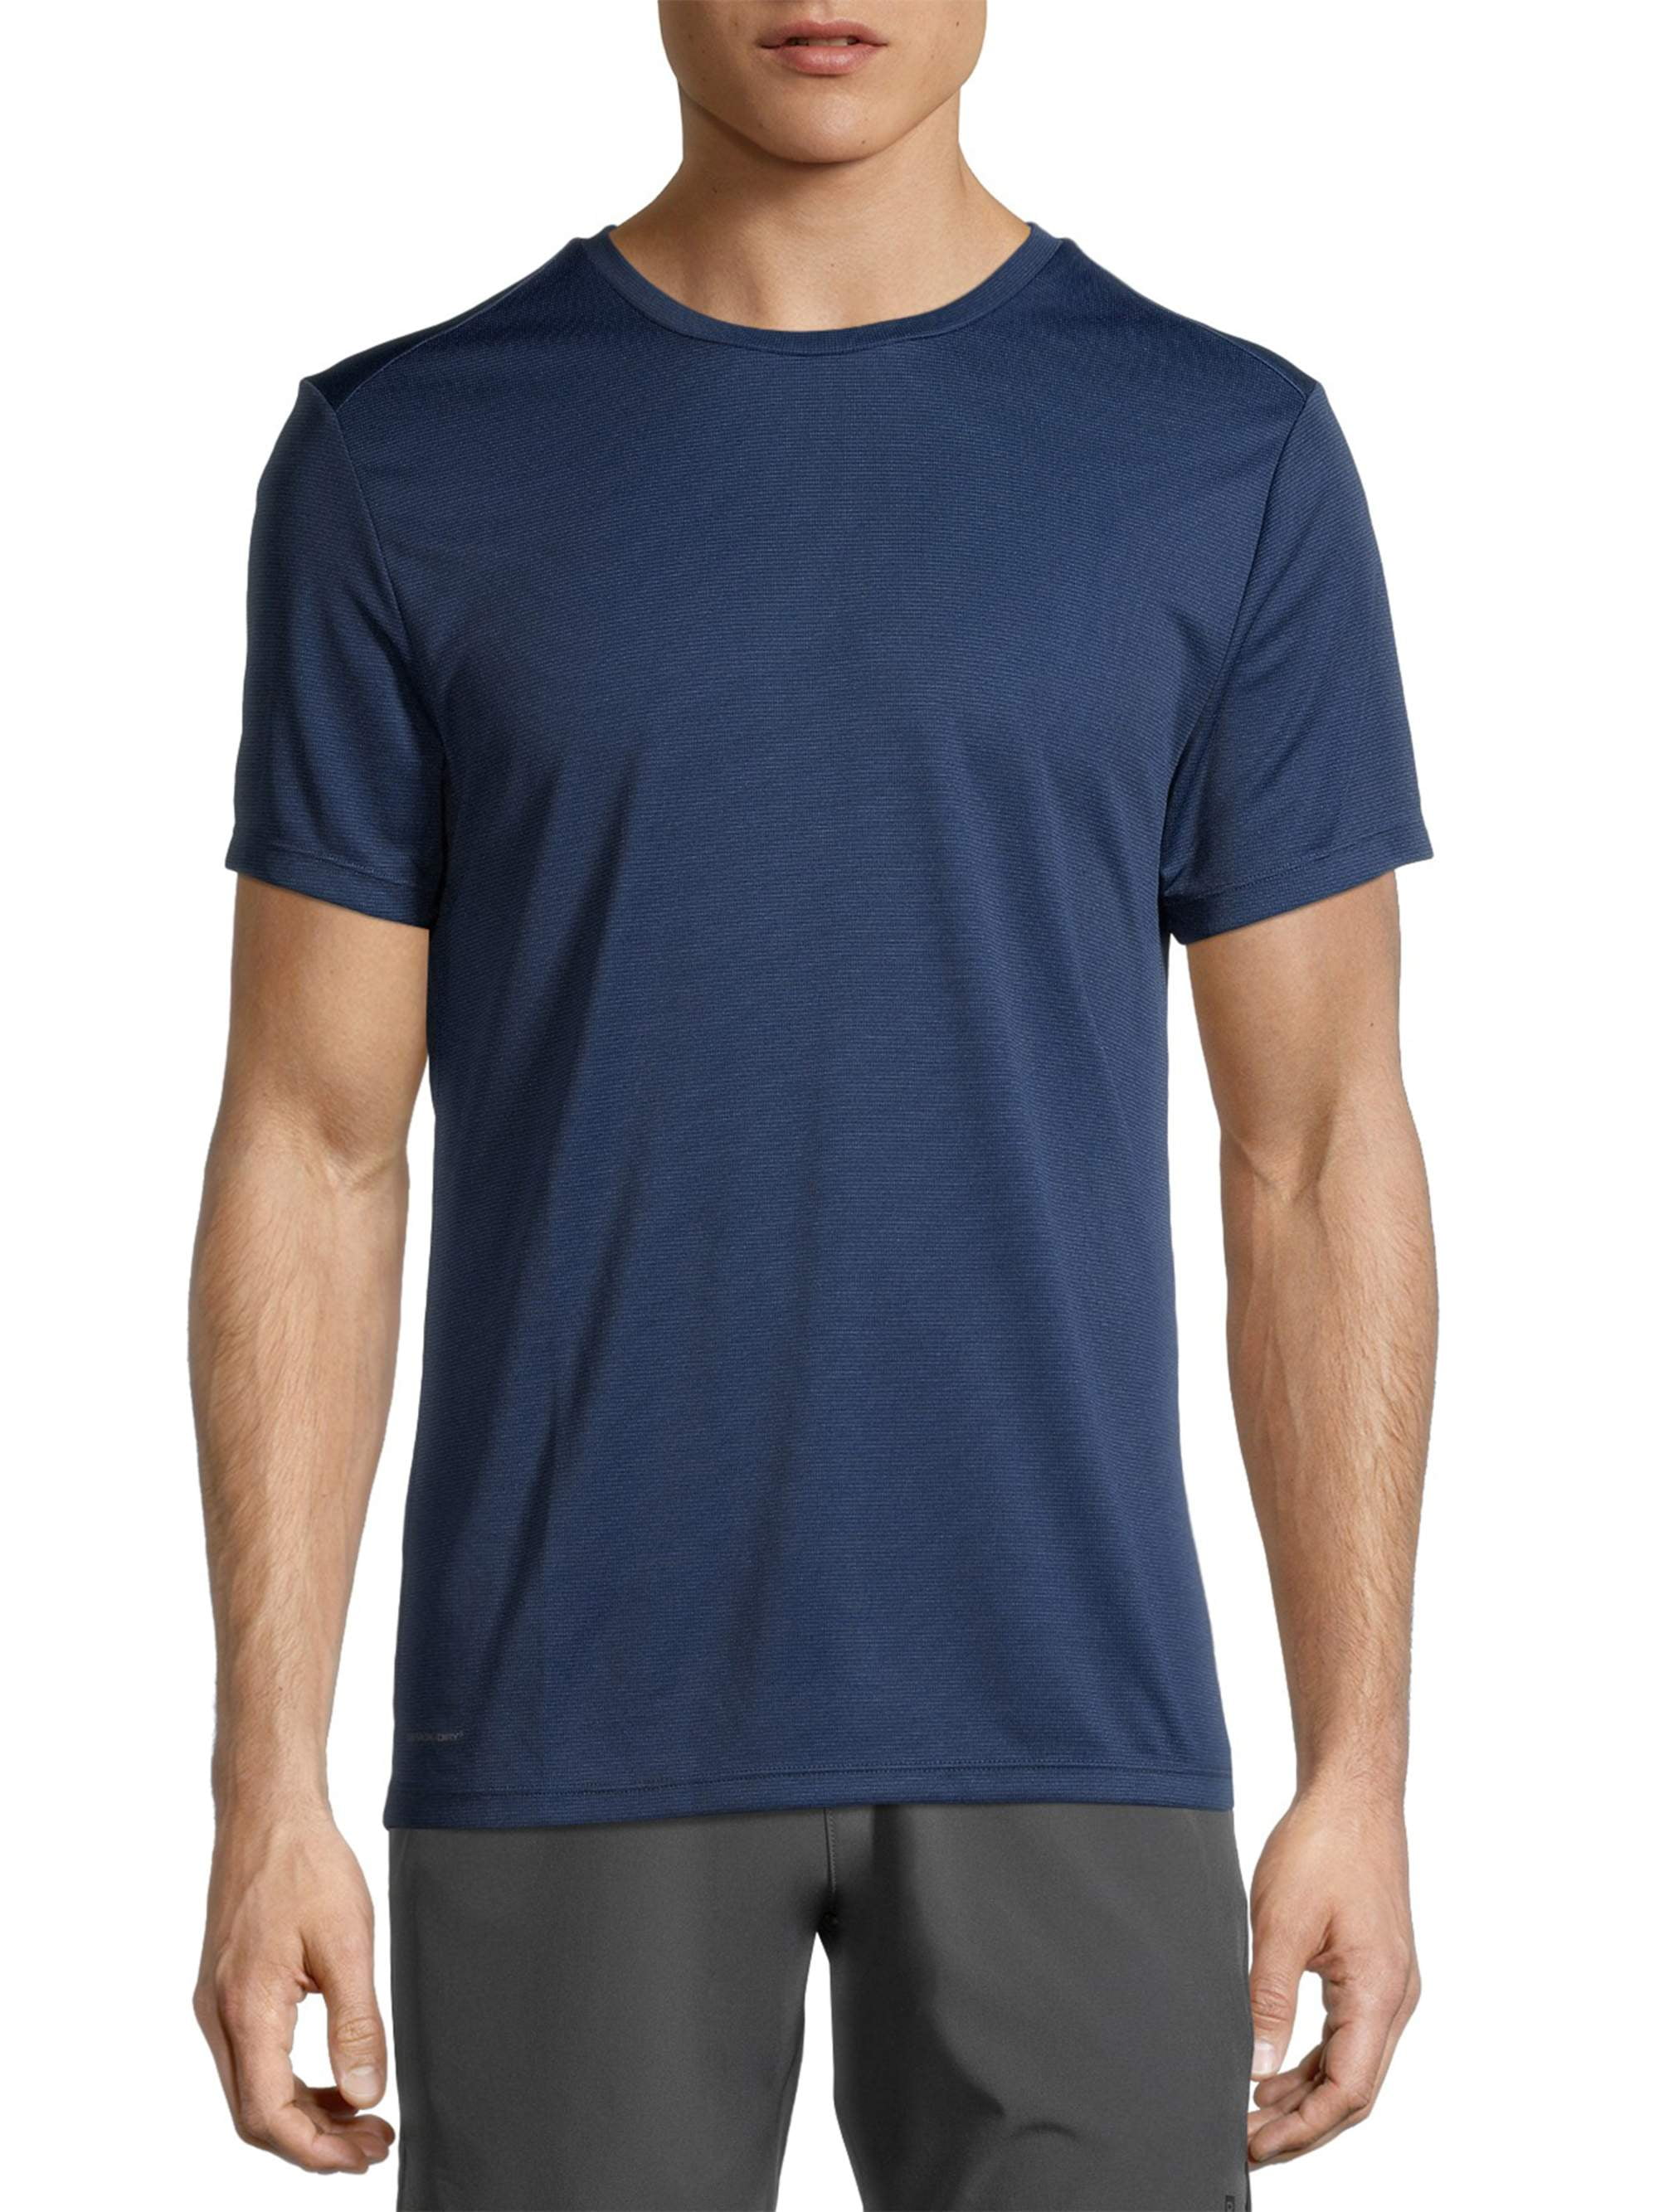 Layer 8 Men's Short Sleeve Textured Crewneck T-Shirt - Walmart.com